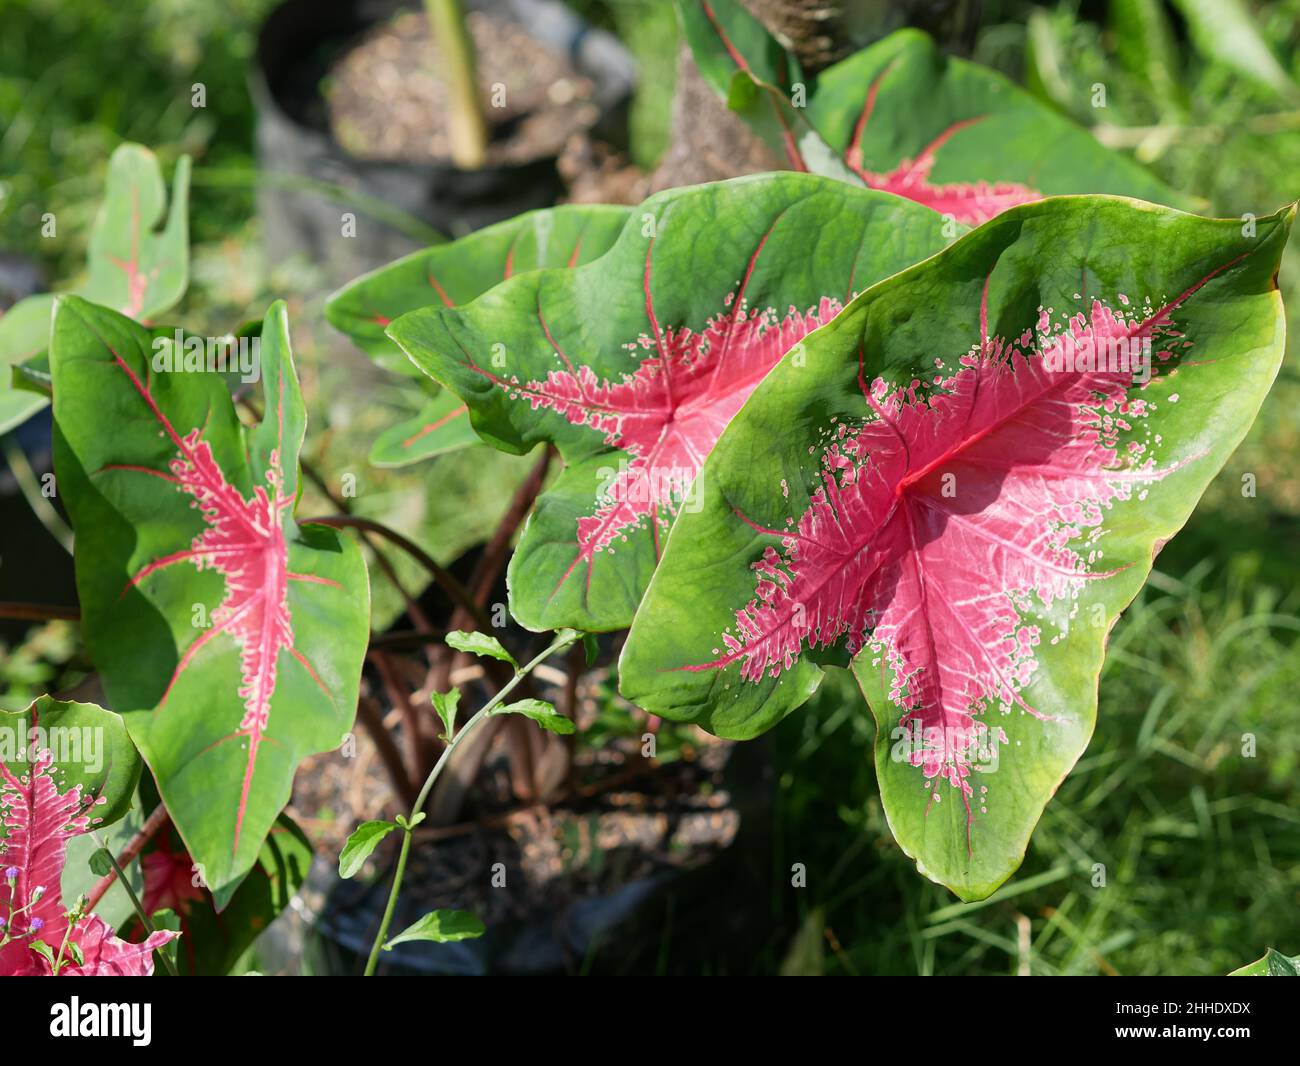 Caladium bicolor with pink leaf and green veins (Florida Sweetheart). red jaguar caladium plant. Stock Photo